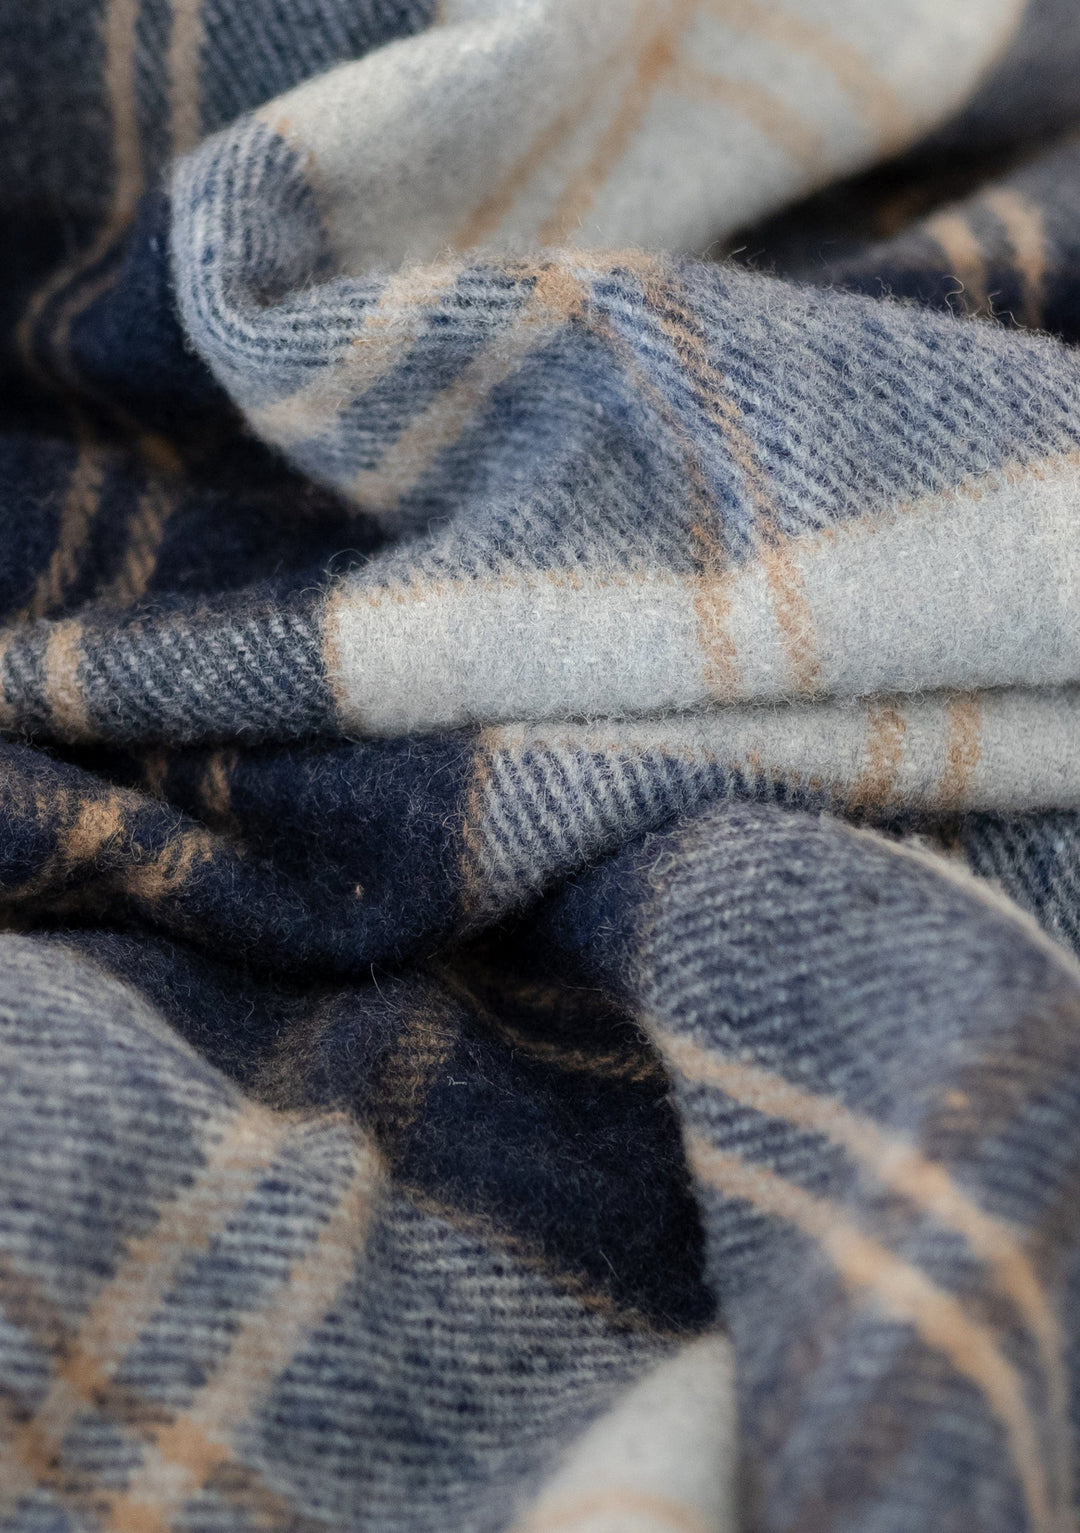 Recycled Wool Blanket in Bannockbane Silver Tartan